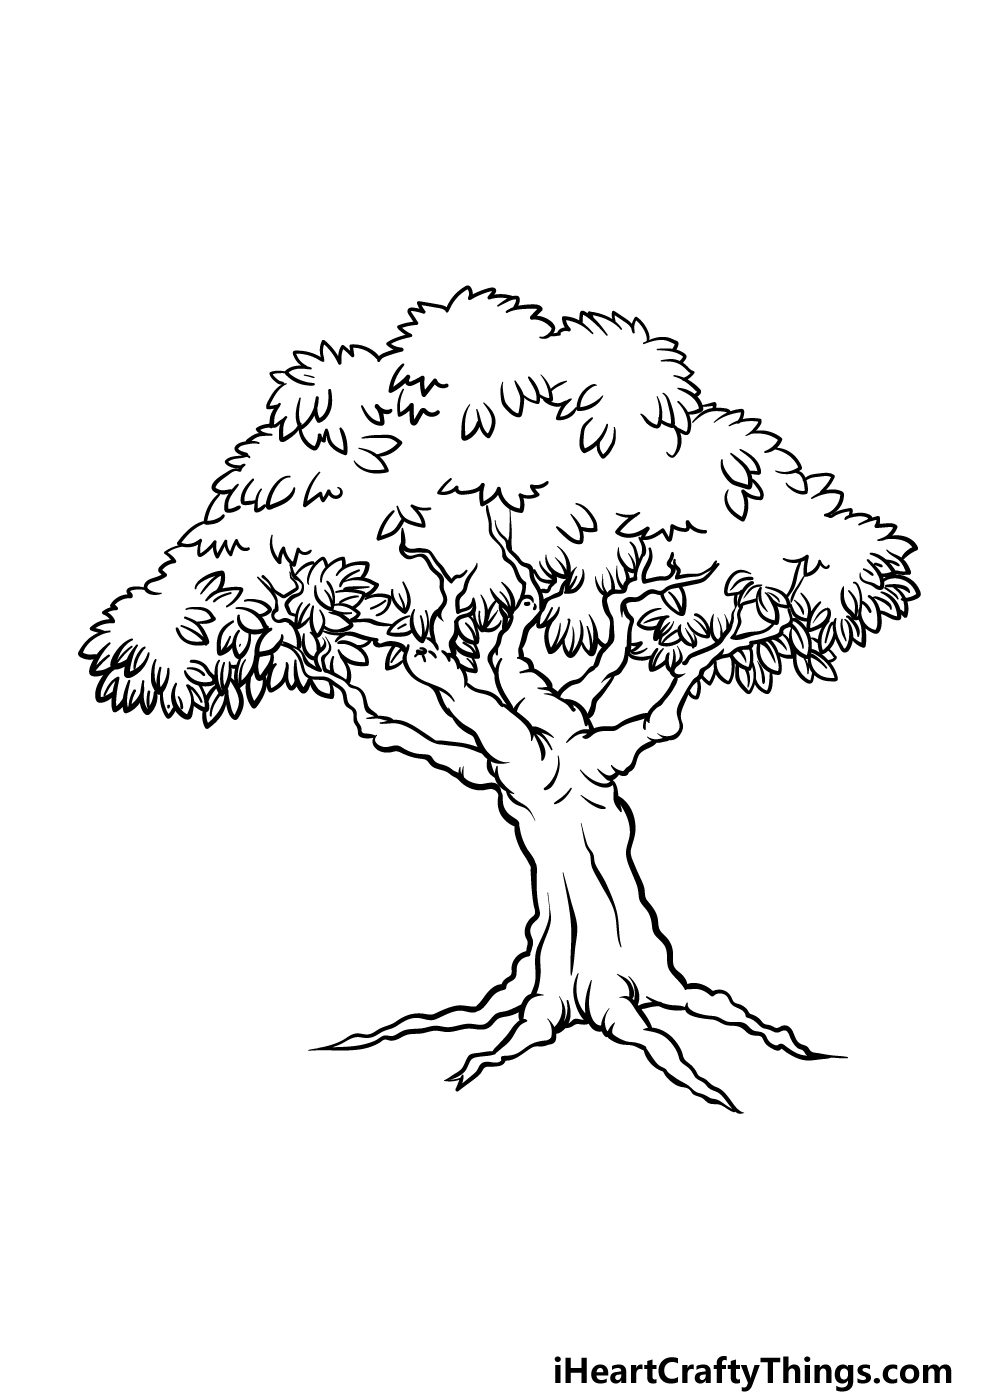 Cartoon Tree Drawing - How To Draw A Cartoon Tree Step By Step